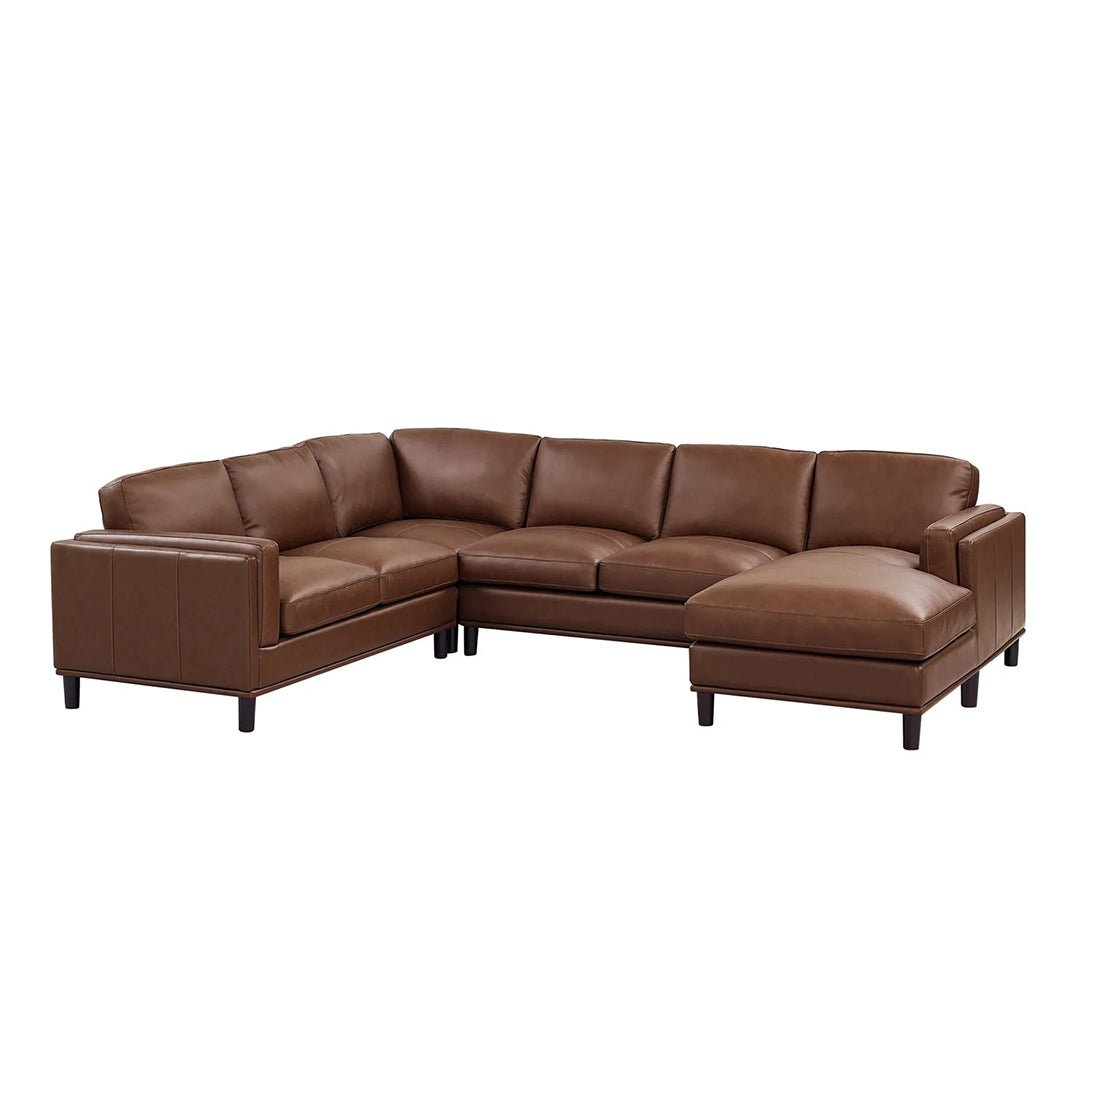 Stanley 6 Seater U Shape Leatherette Modular Sofa for Living Room - (Dark Brown) - Torque India